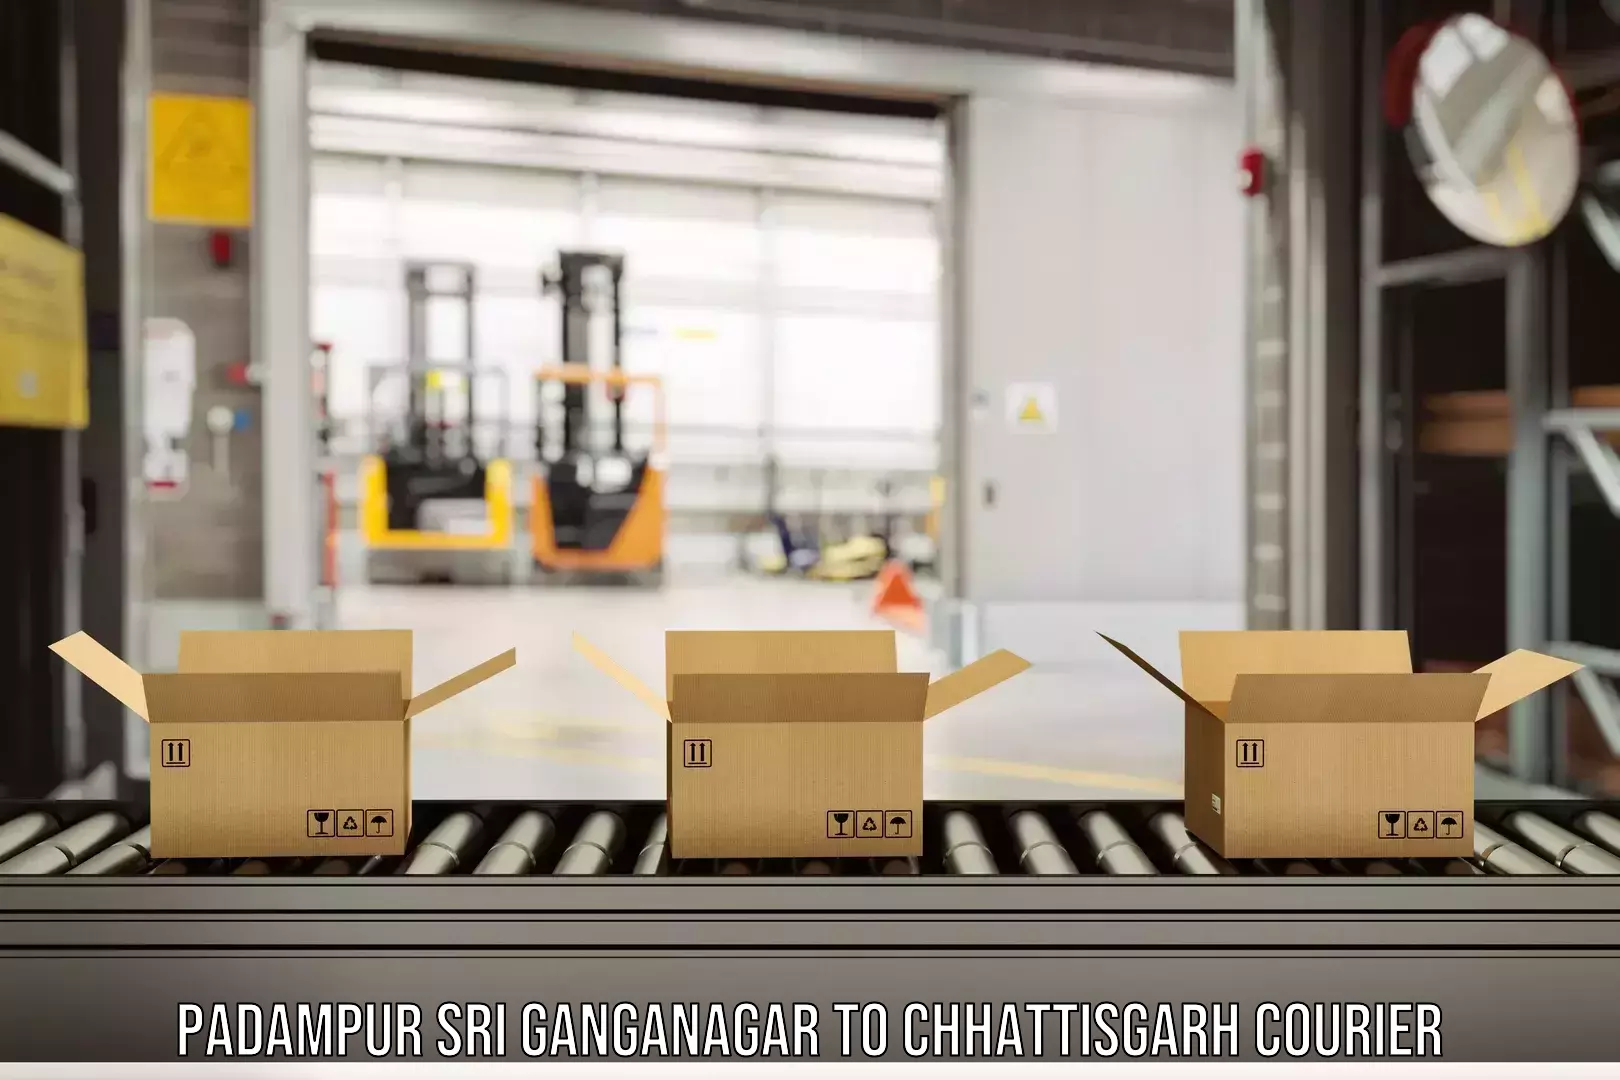 User-friendly delivery service Padampur Sri Ganganagar to Khairagarh